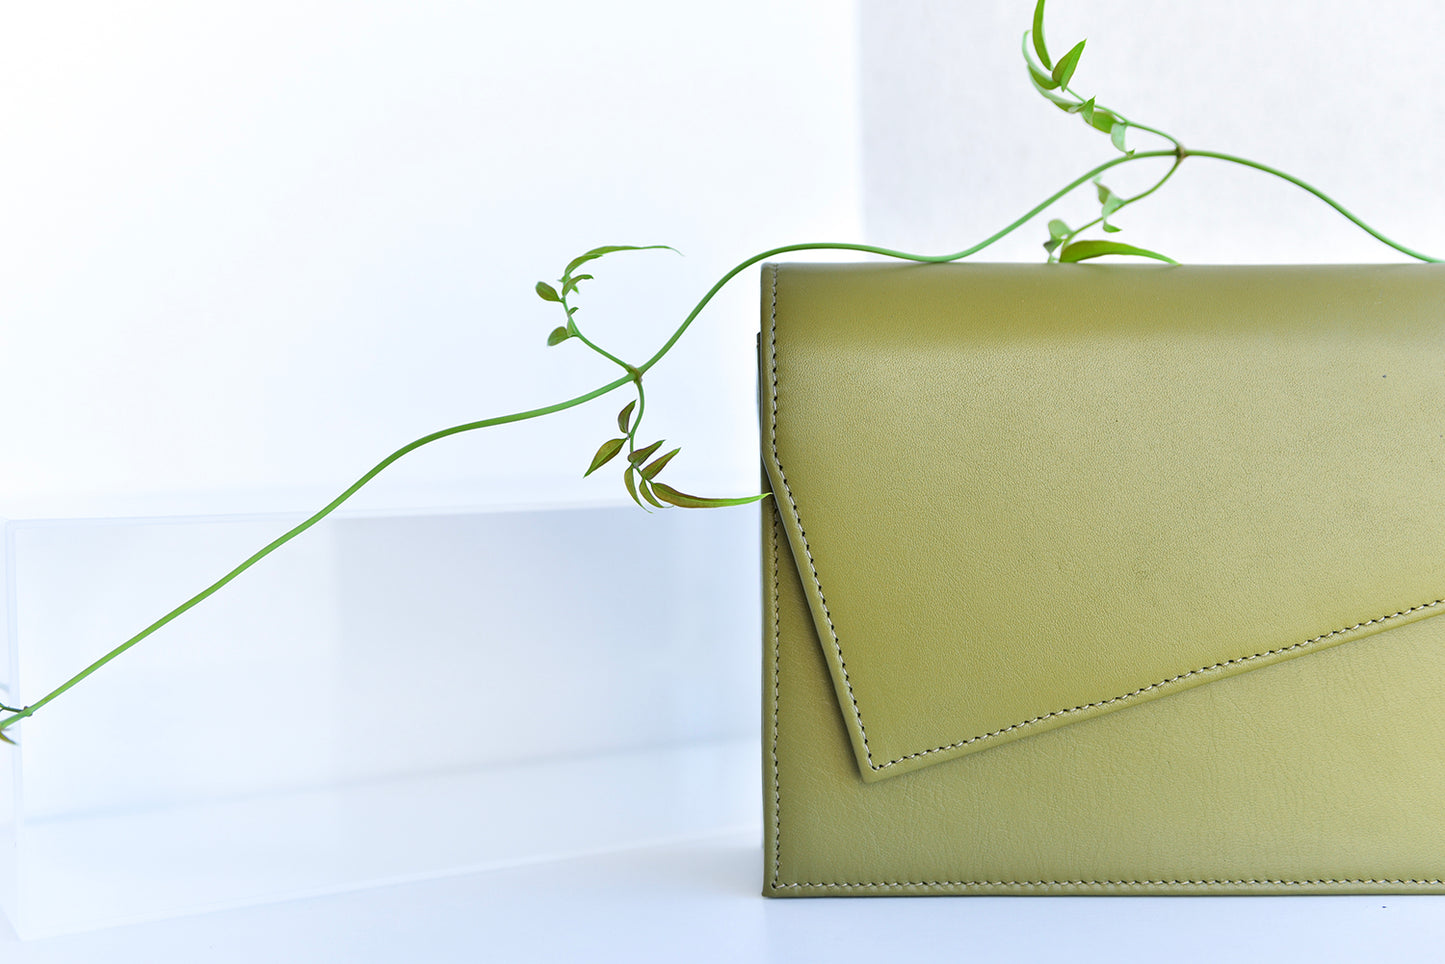 Olive green leather clutch handbag